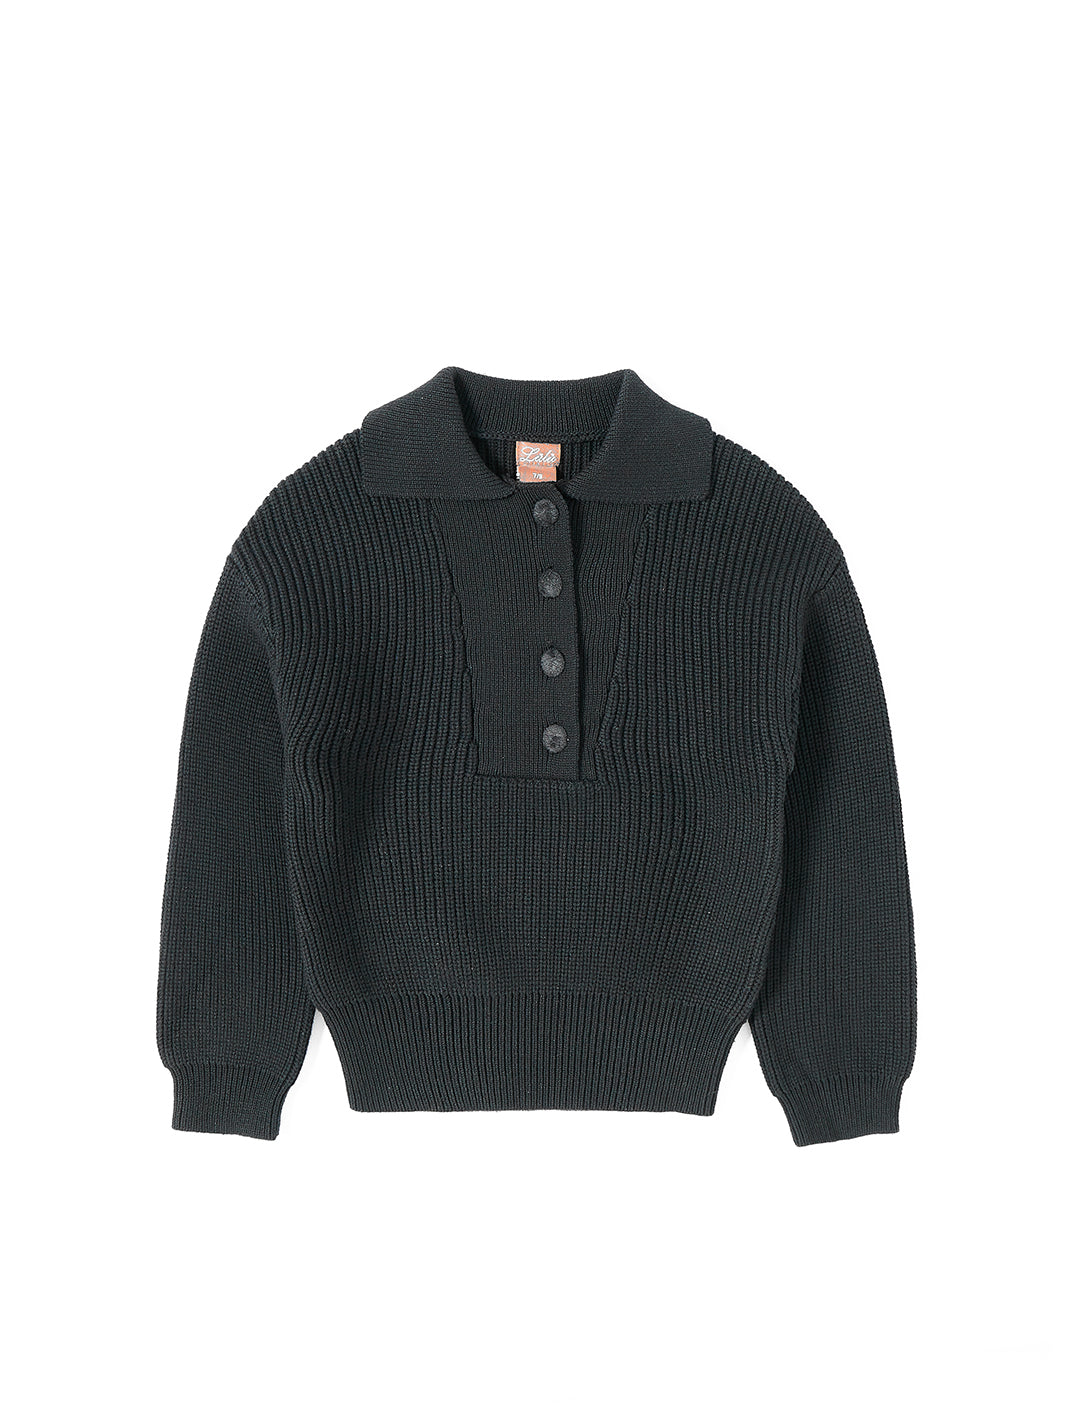 Raised Wavy Knit Sweater - Black